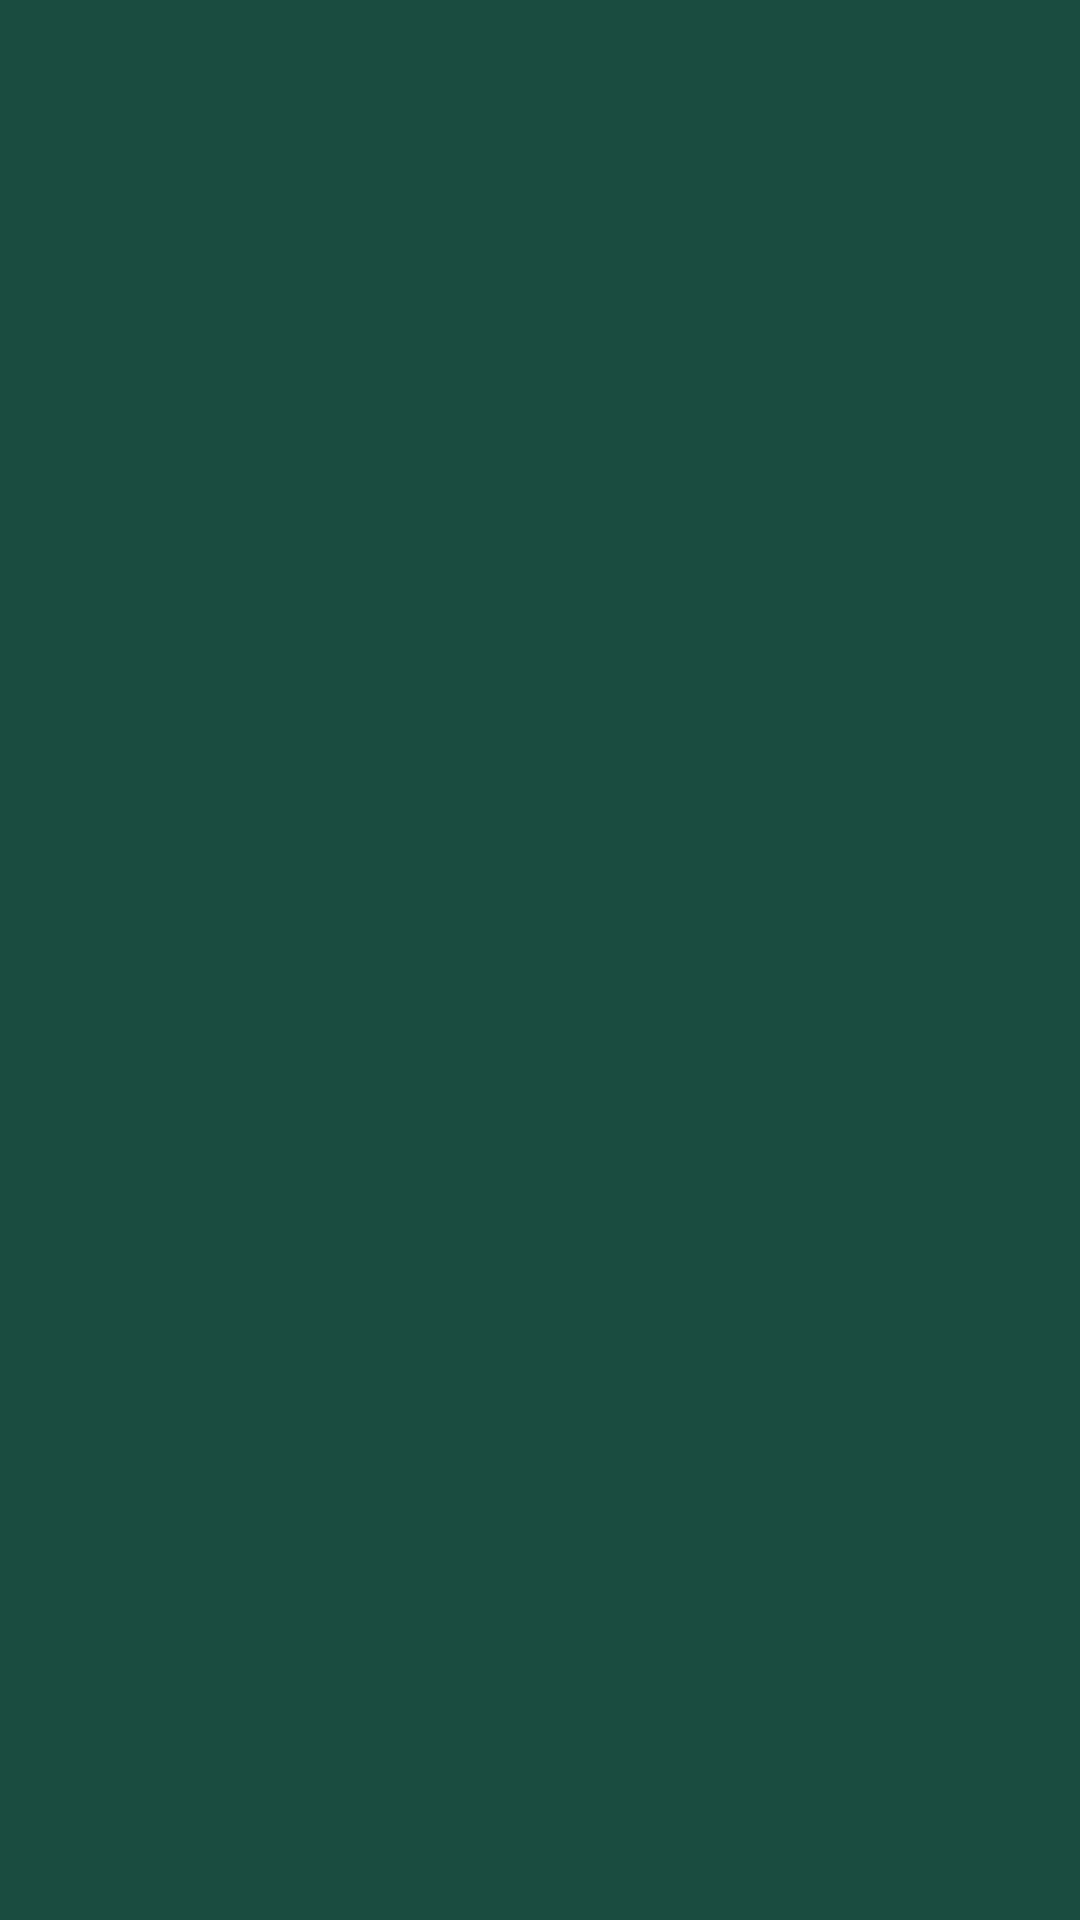 Fondode Pantalla En Verde Esmeralda 2160 X 3840. Fondo de pantalla